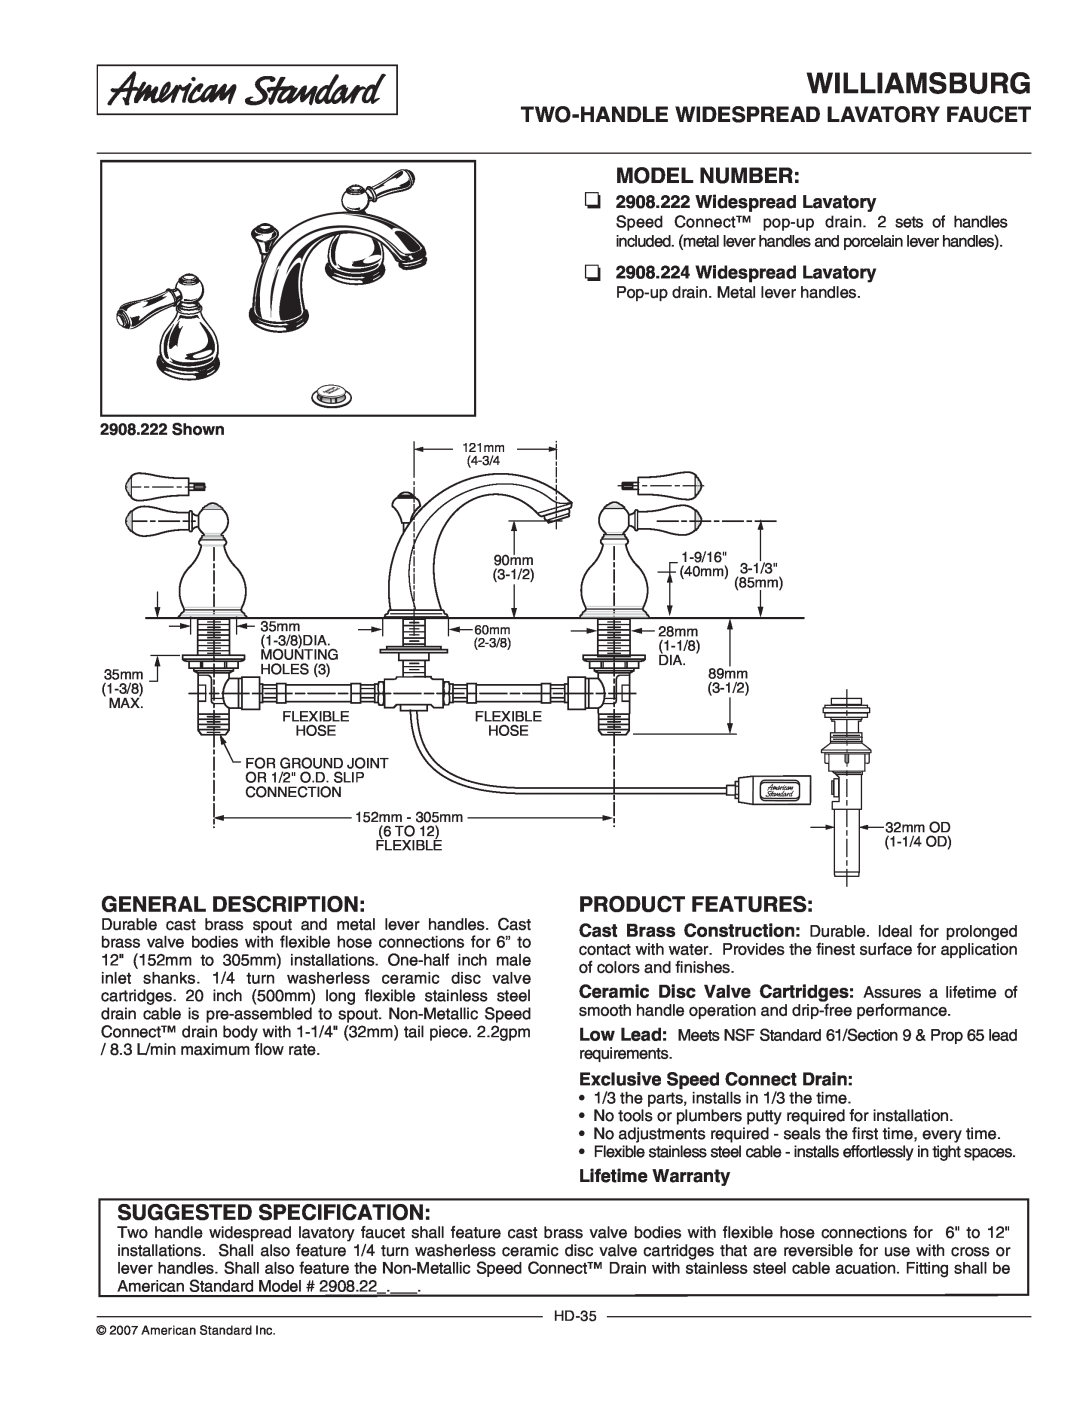 American Standard 2908.22 warranty Williamsburg, Two-Handlewidespread Lavatory Faucet Model Number, General Description 